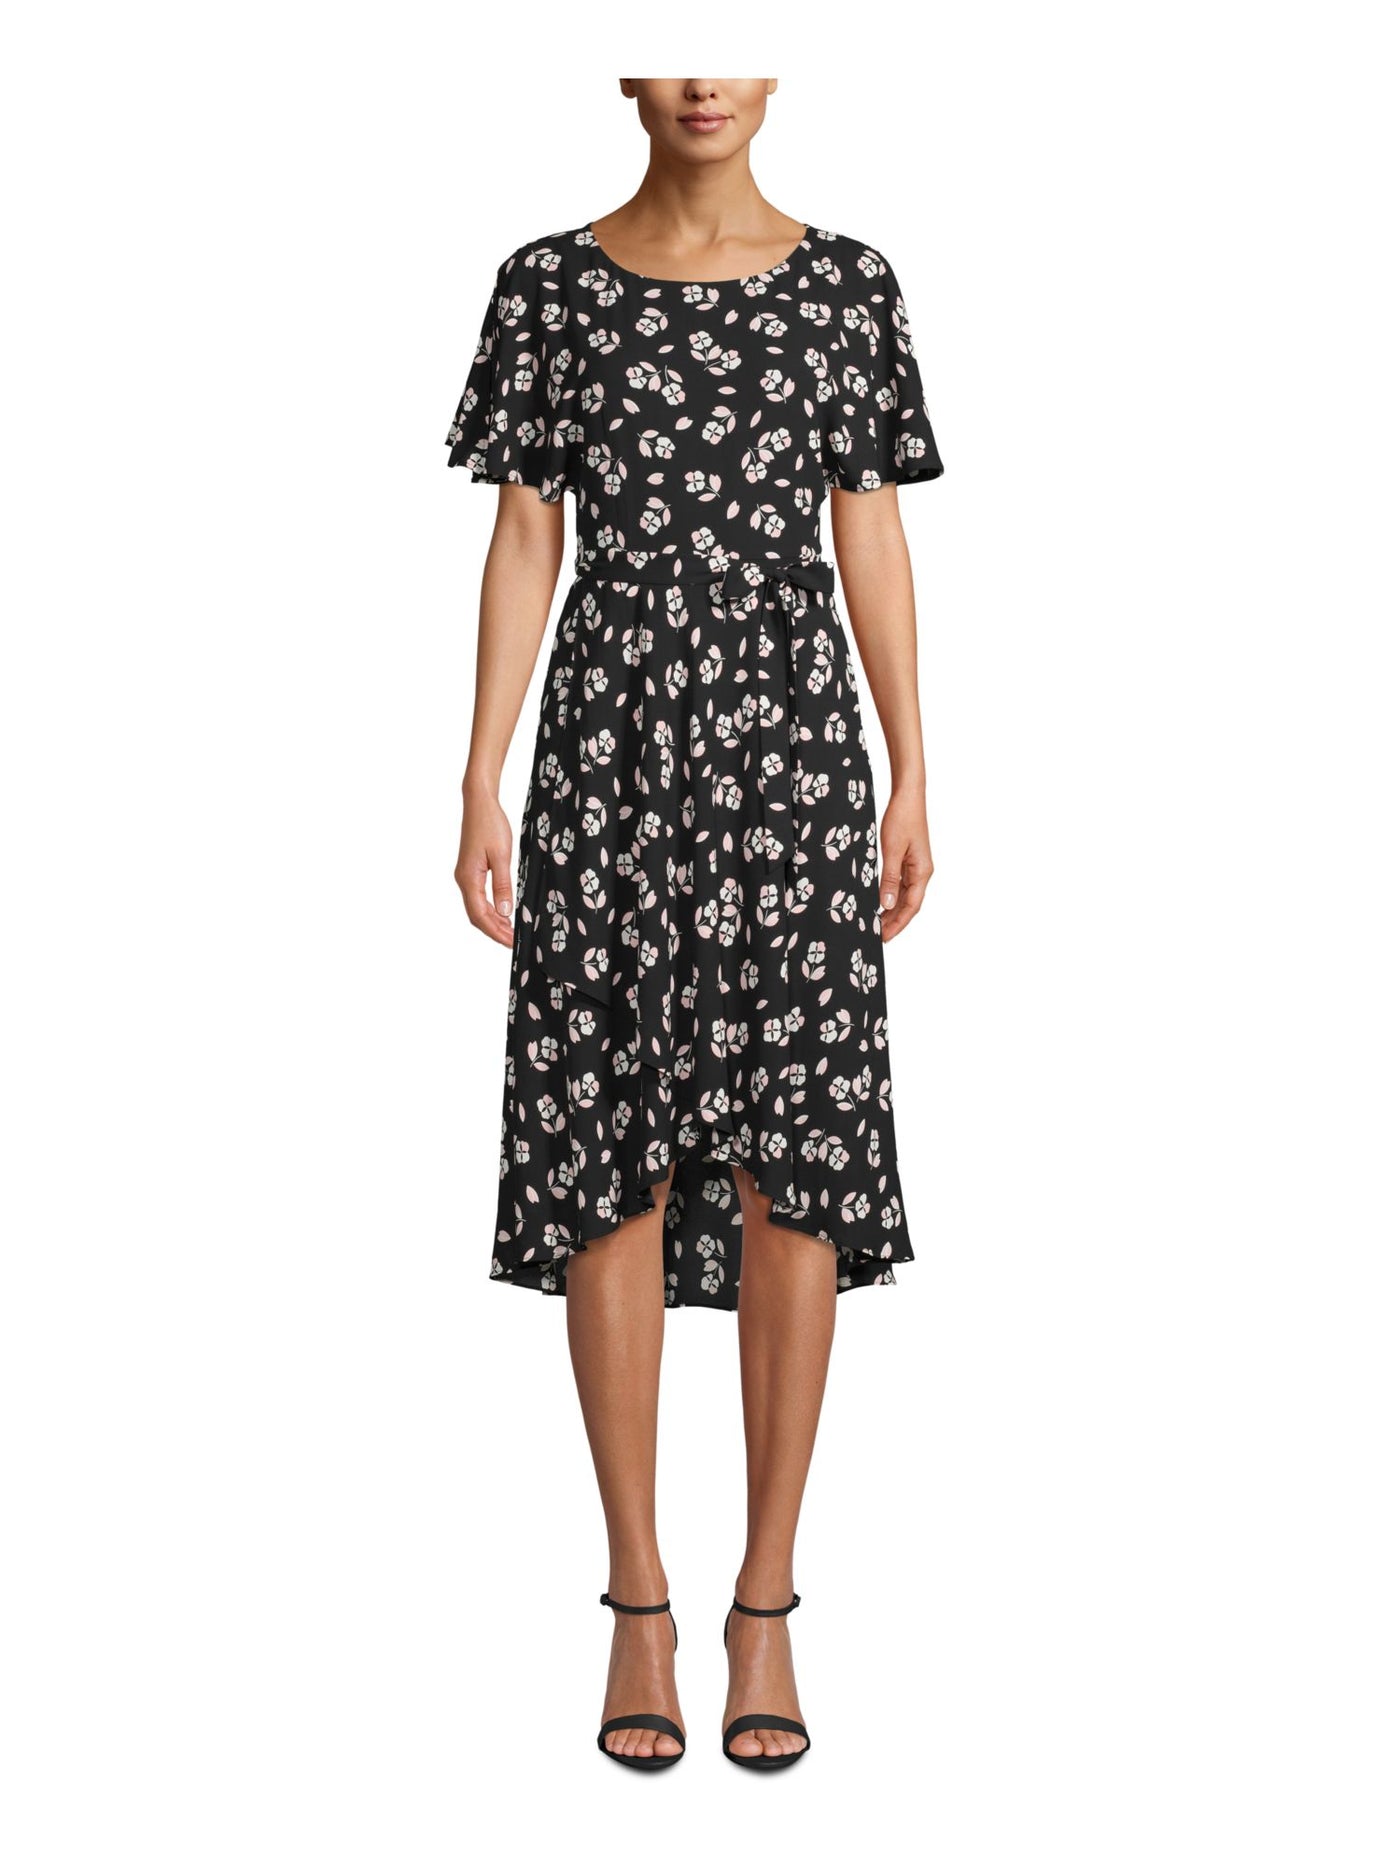 ANNE KLEIN Womens Black Floral Short Sleeve Jewel Neck Below The Knee Fit + Flare Dress 2